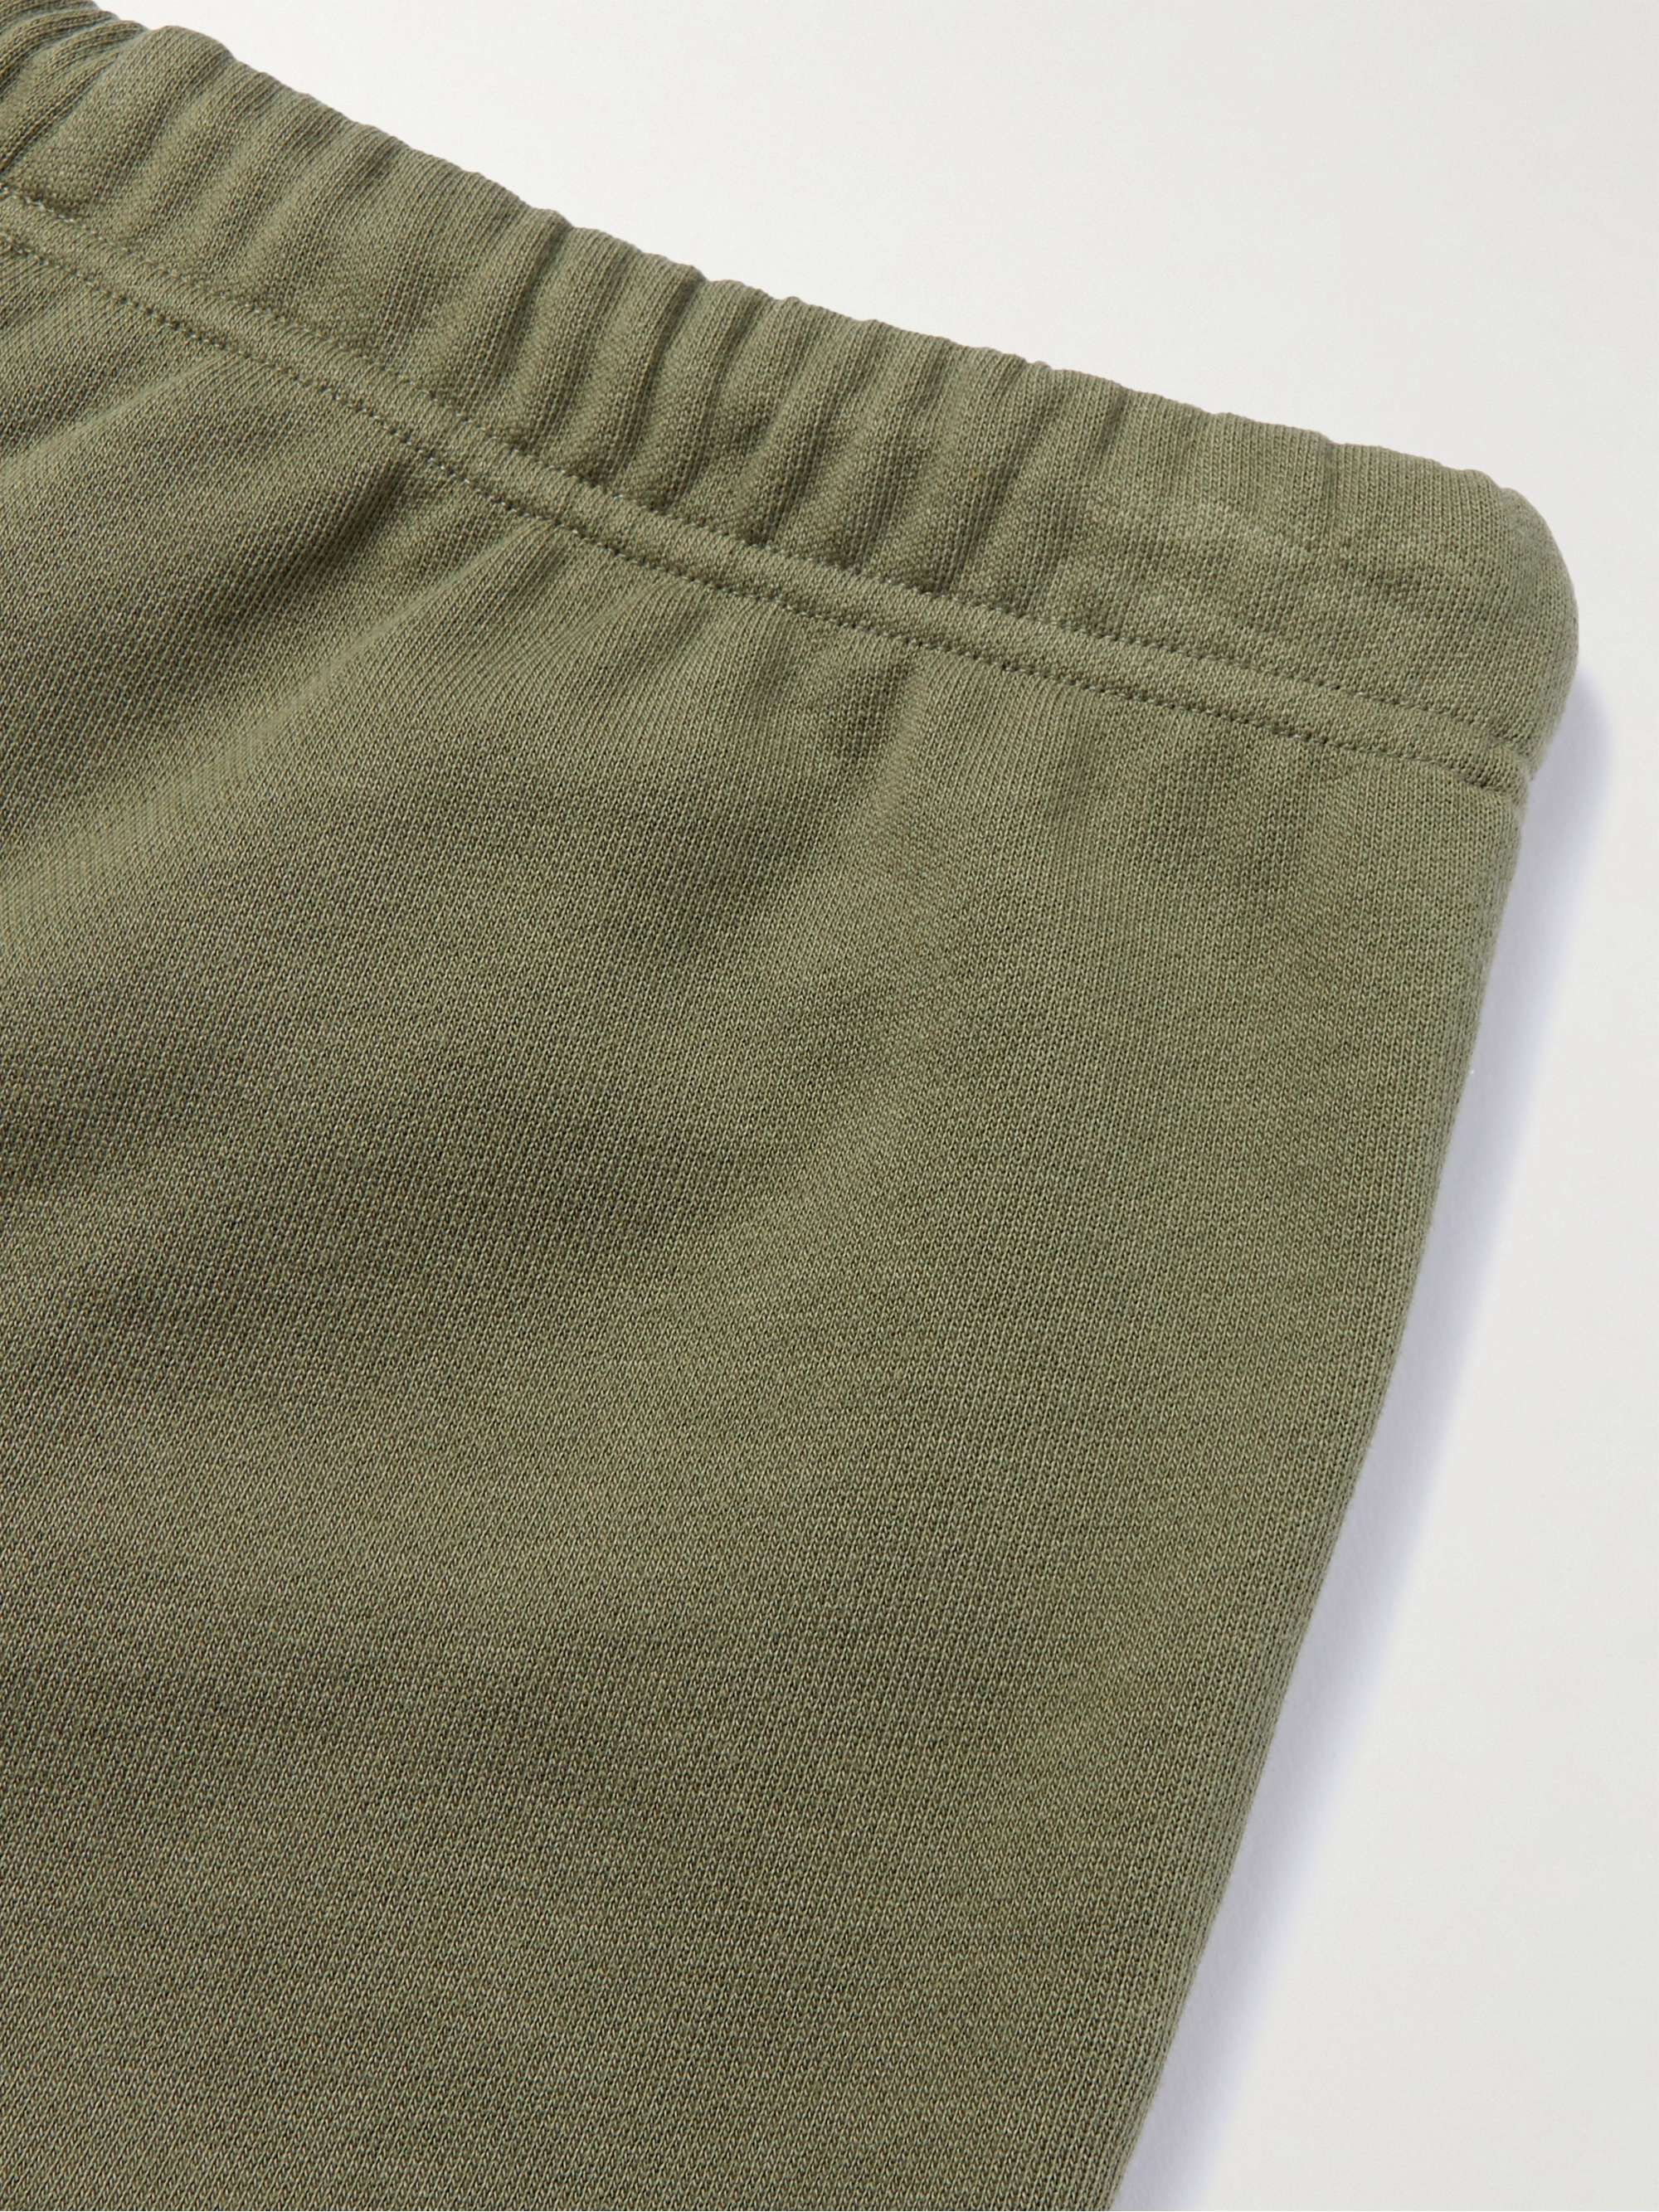 CELINE HOMME Straight-Leg Logo-Print Cotton-Jersey Drawstring Shorts